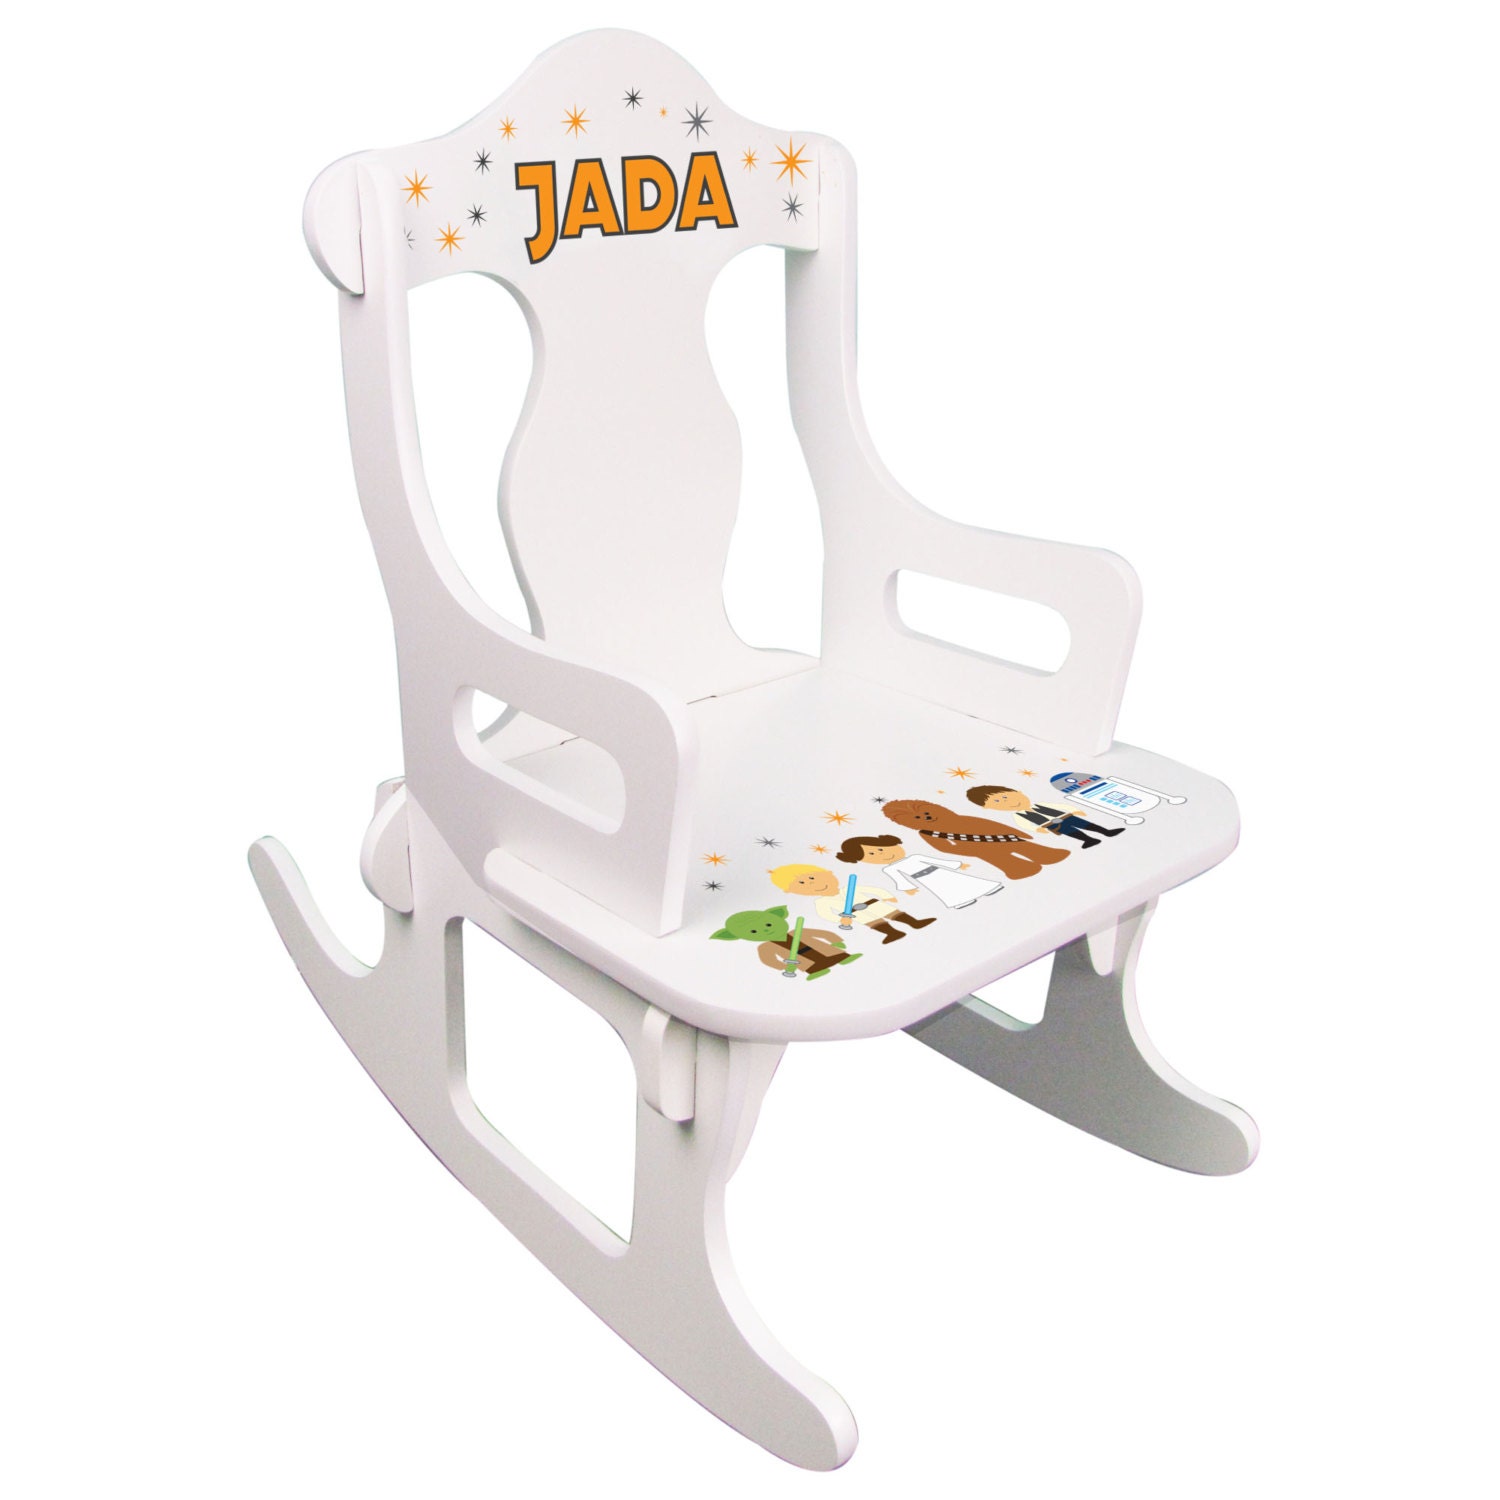 Star Wars Rocking Chair Personalized Child S Rocker White Etsy